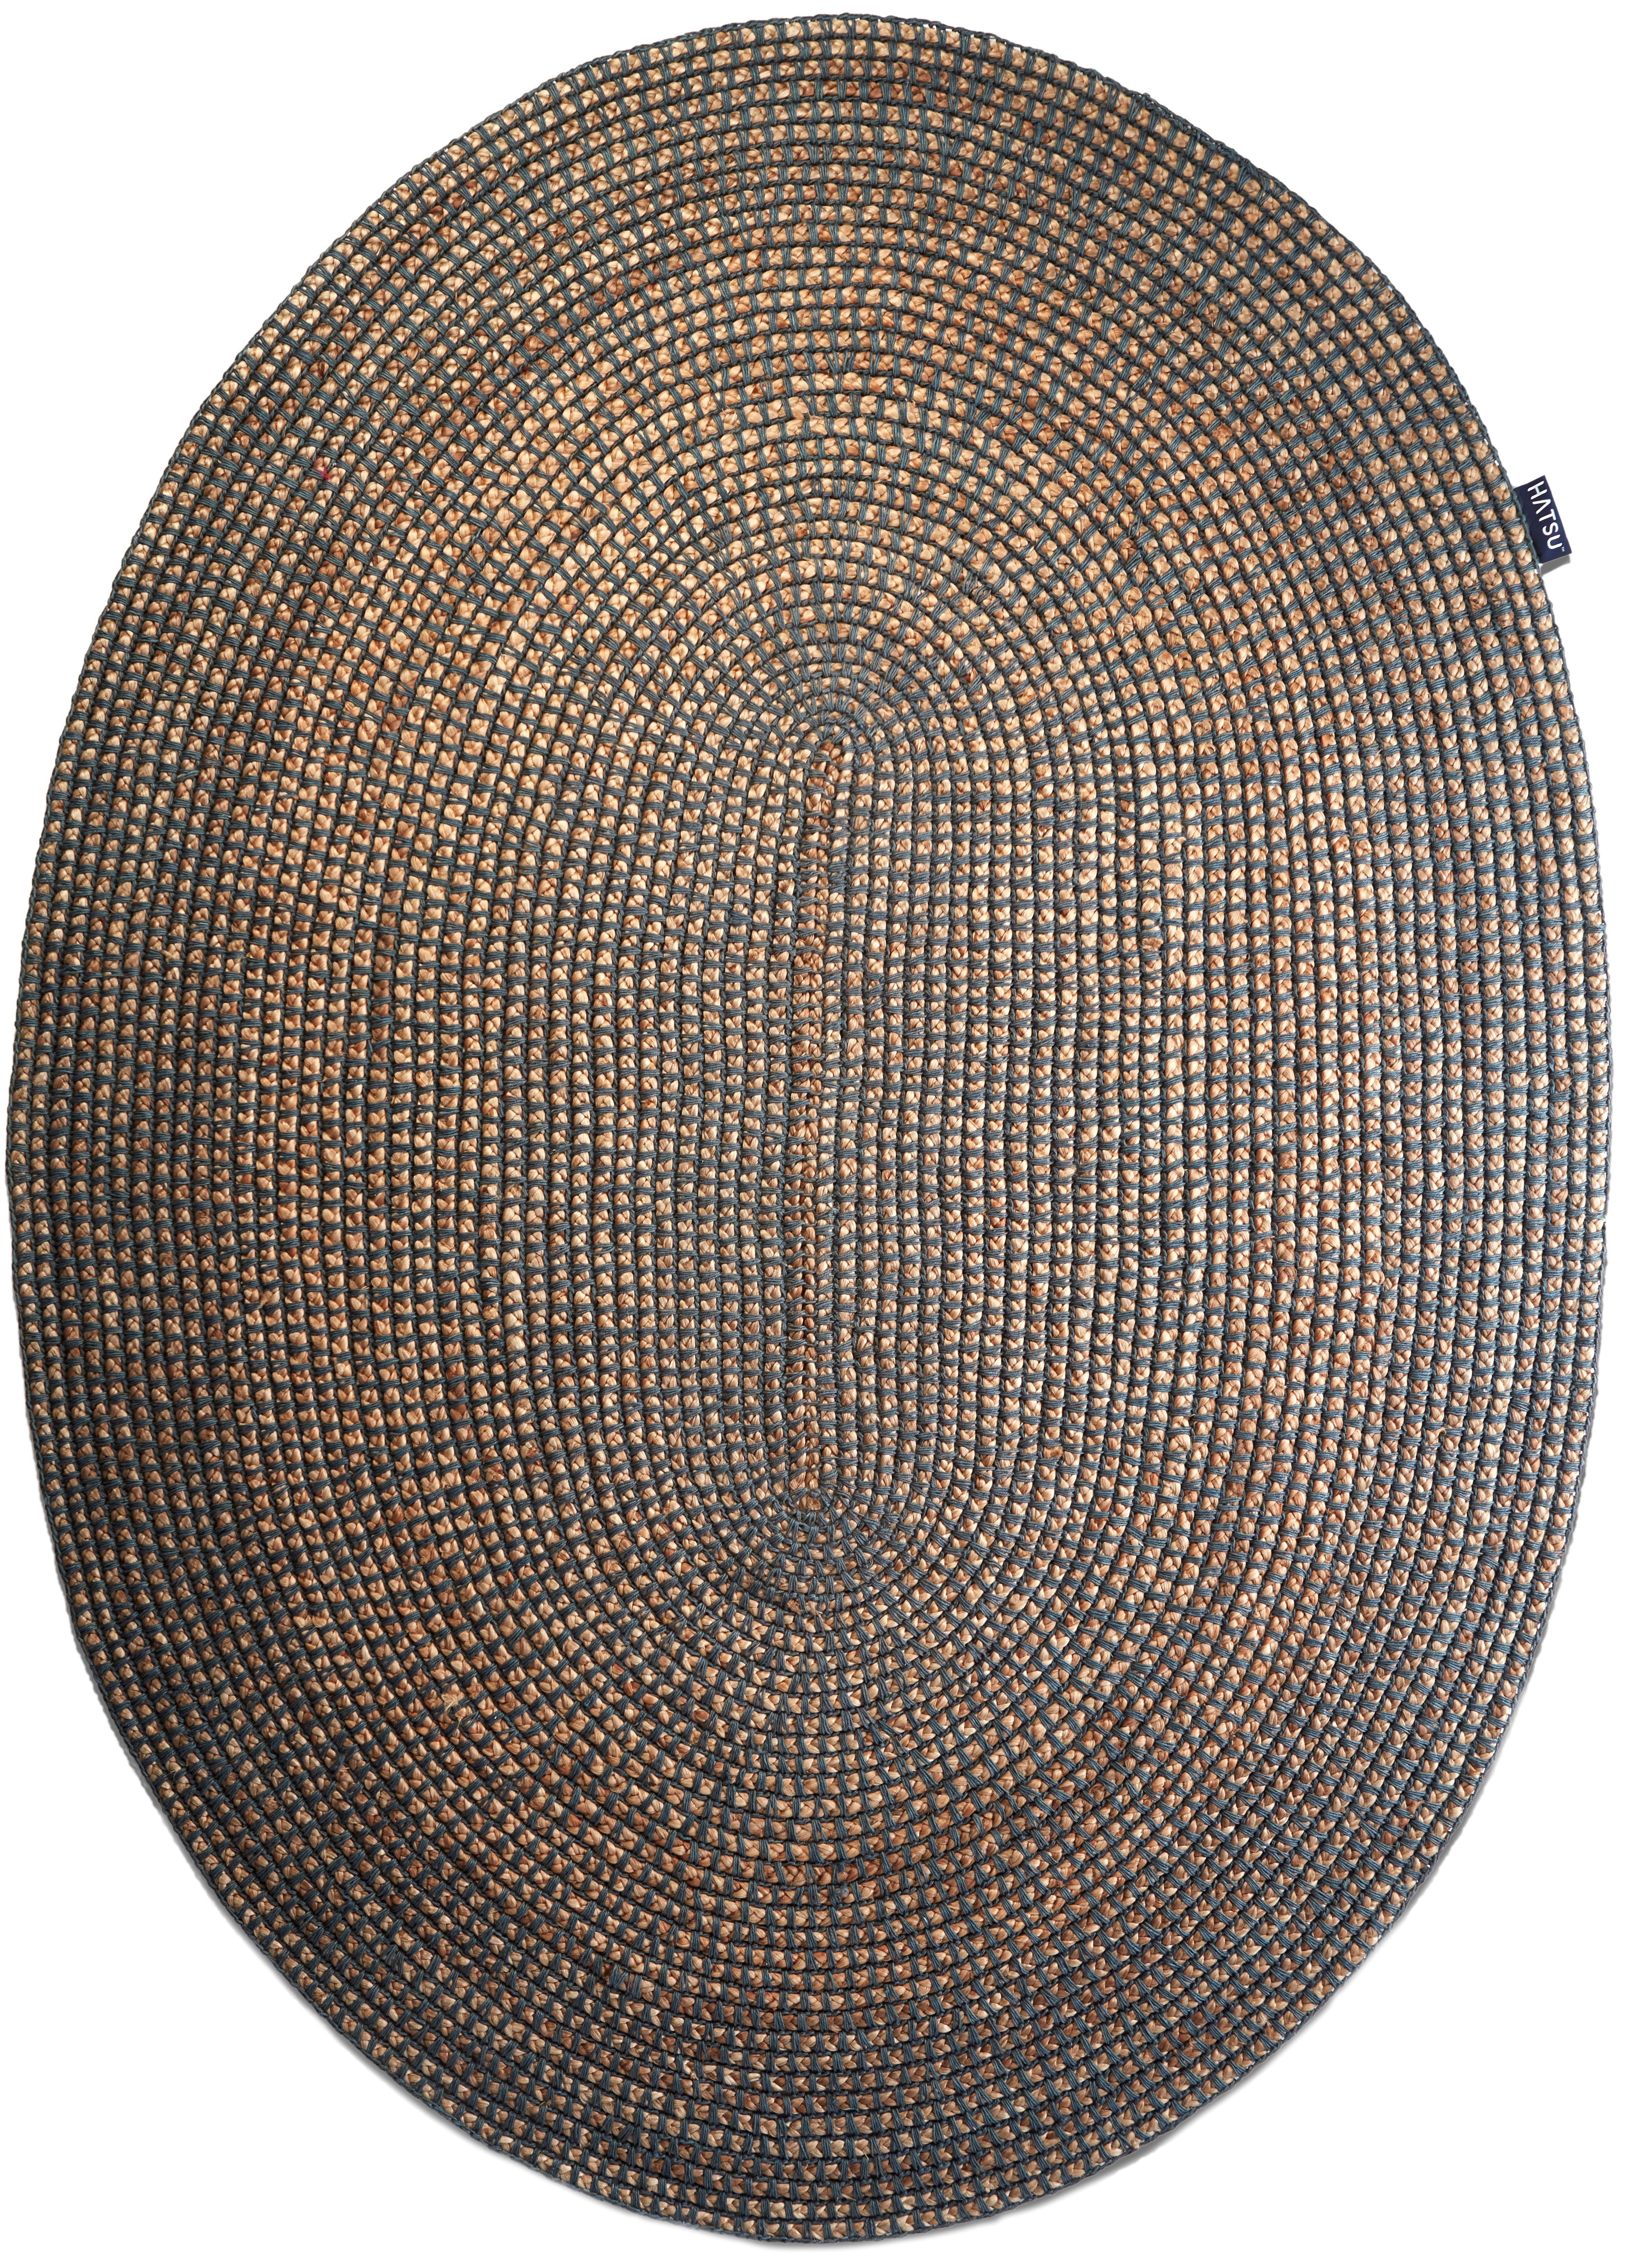 Indian Handloom Oval Jute Rug by Hatsu For Sale